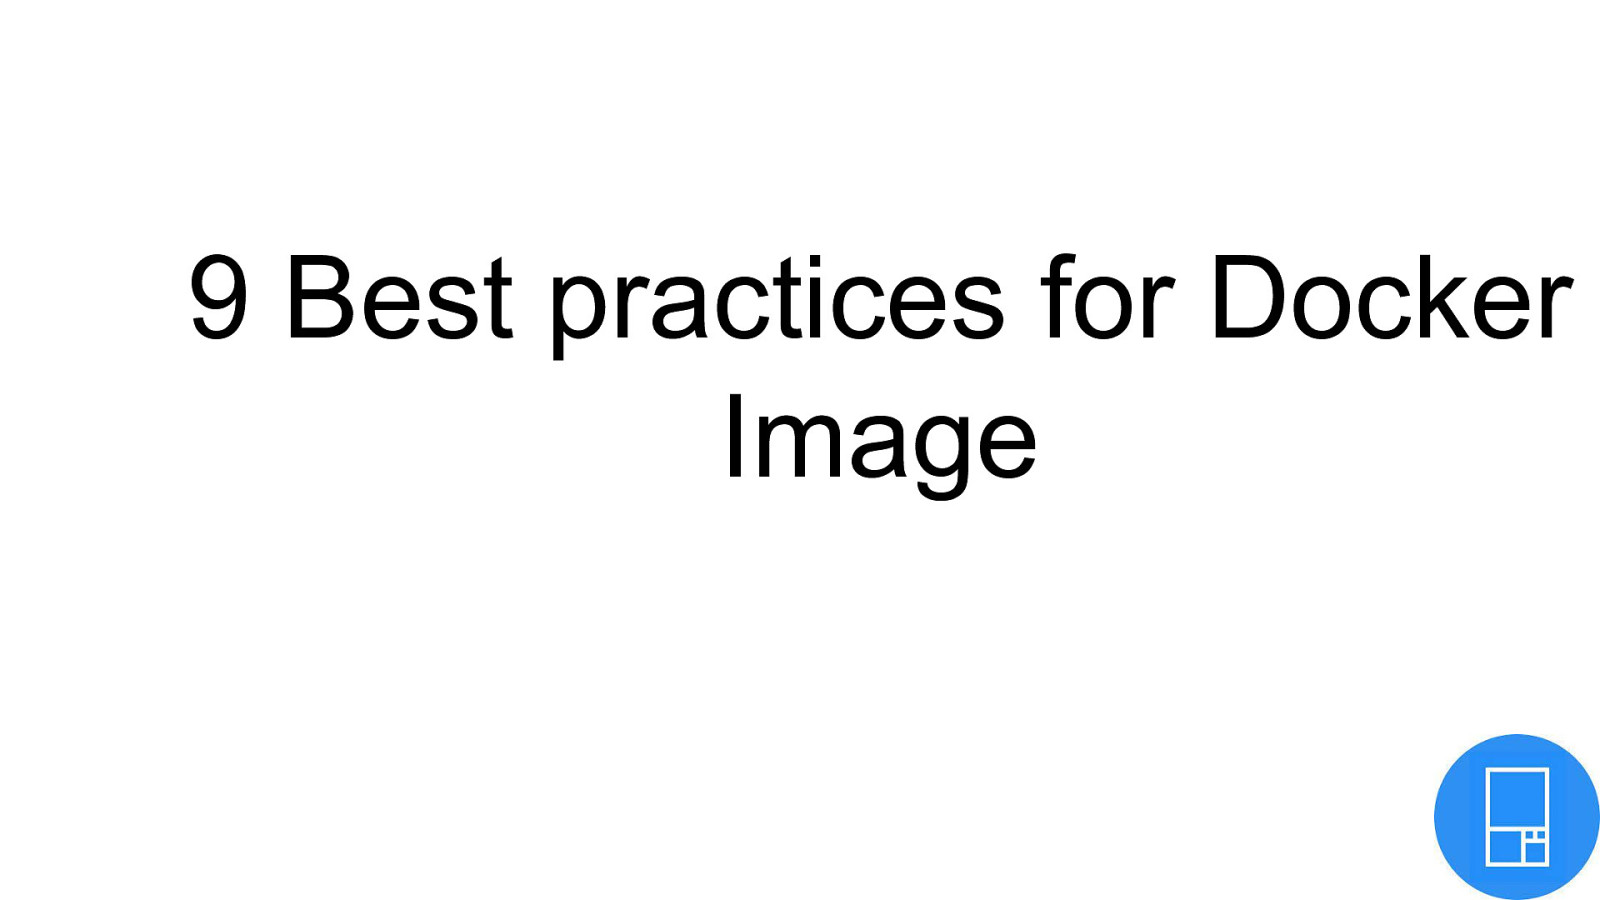 9 Best practices for Docker Image